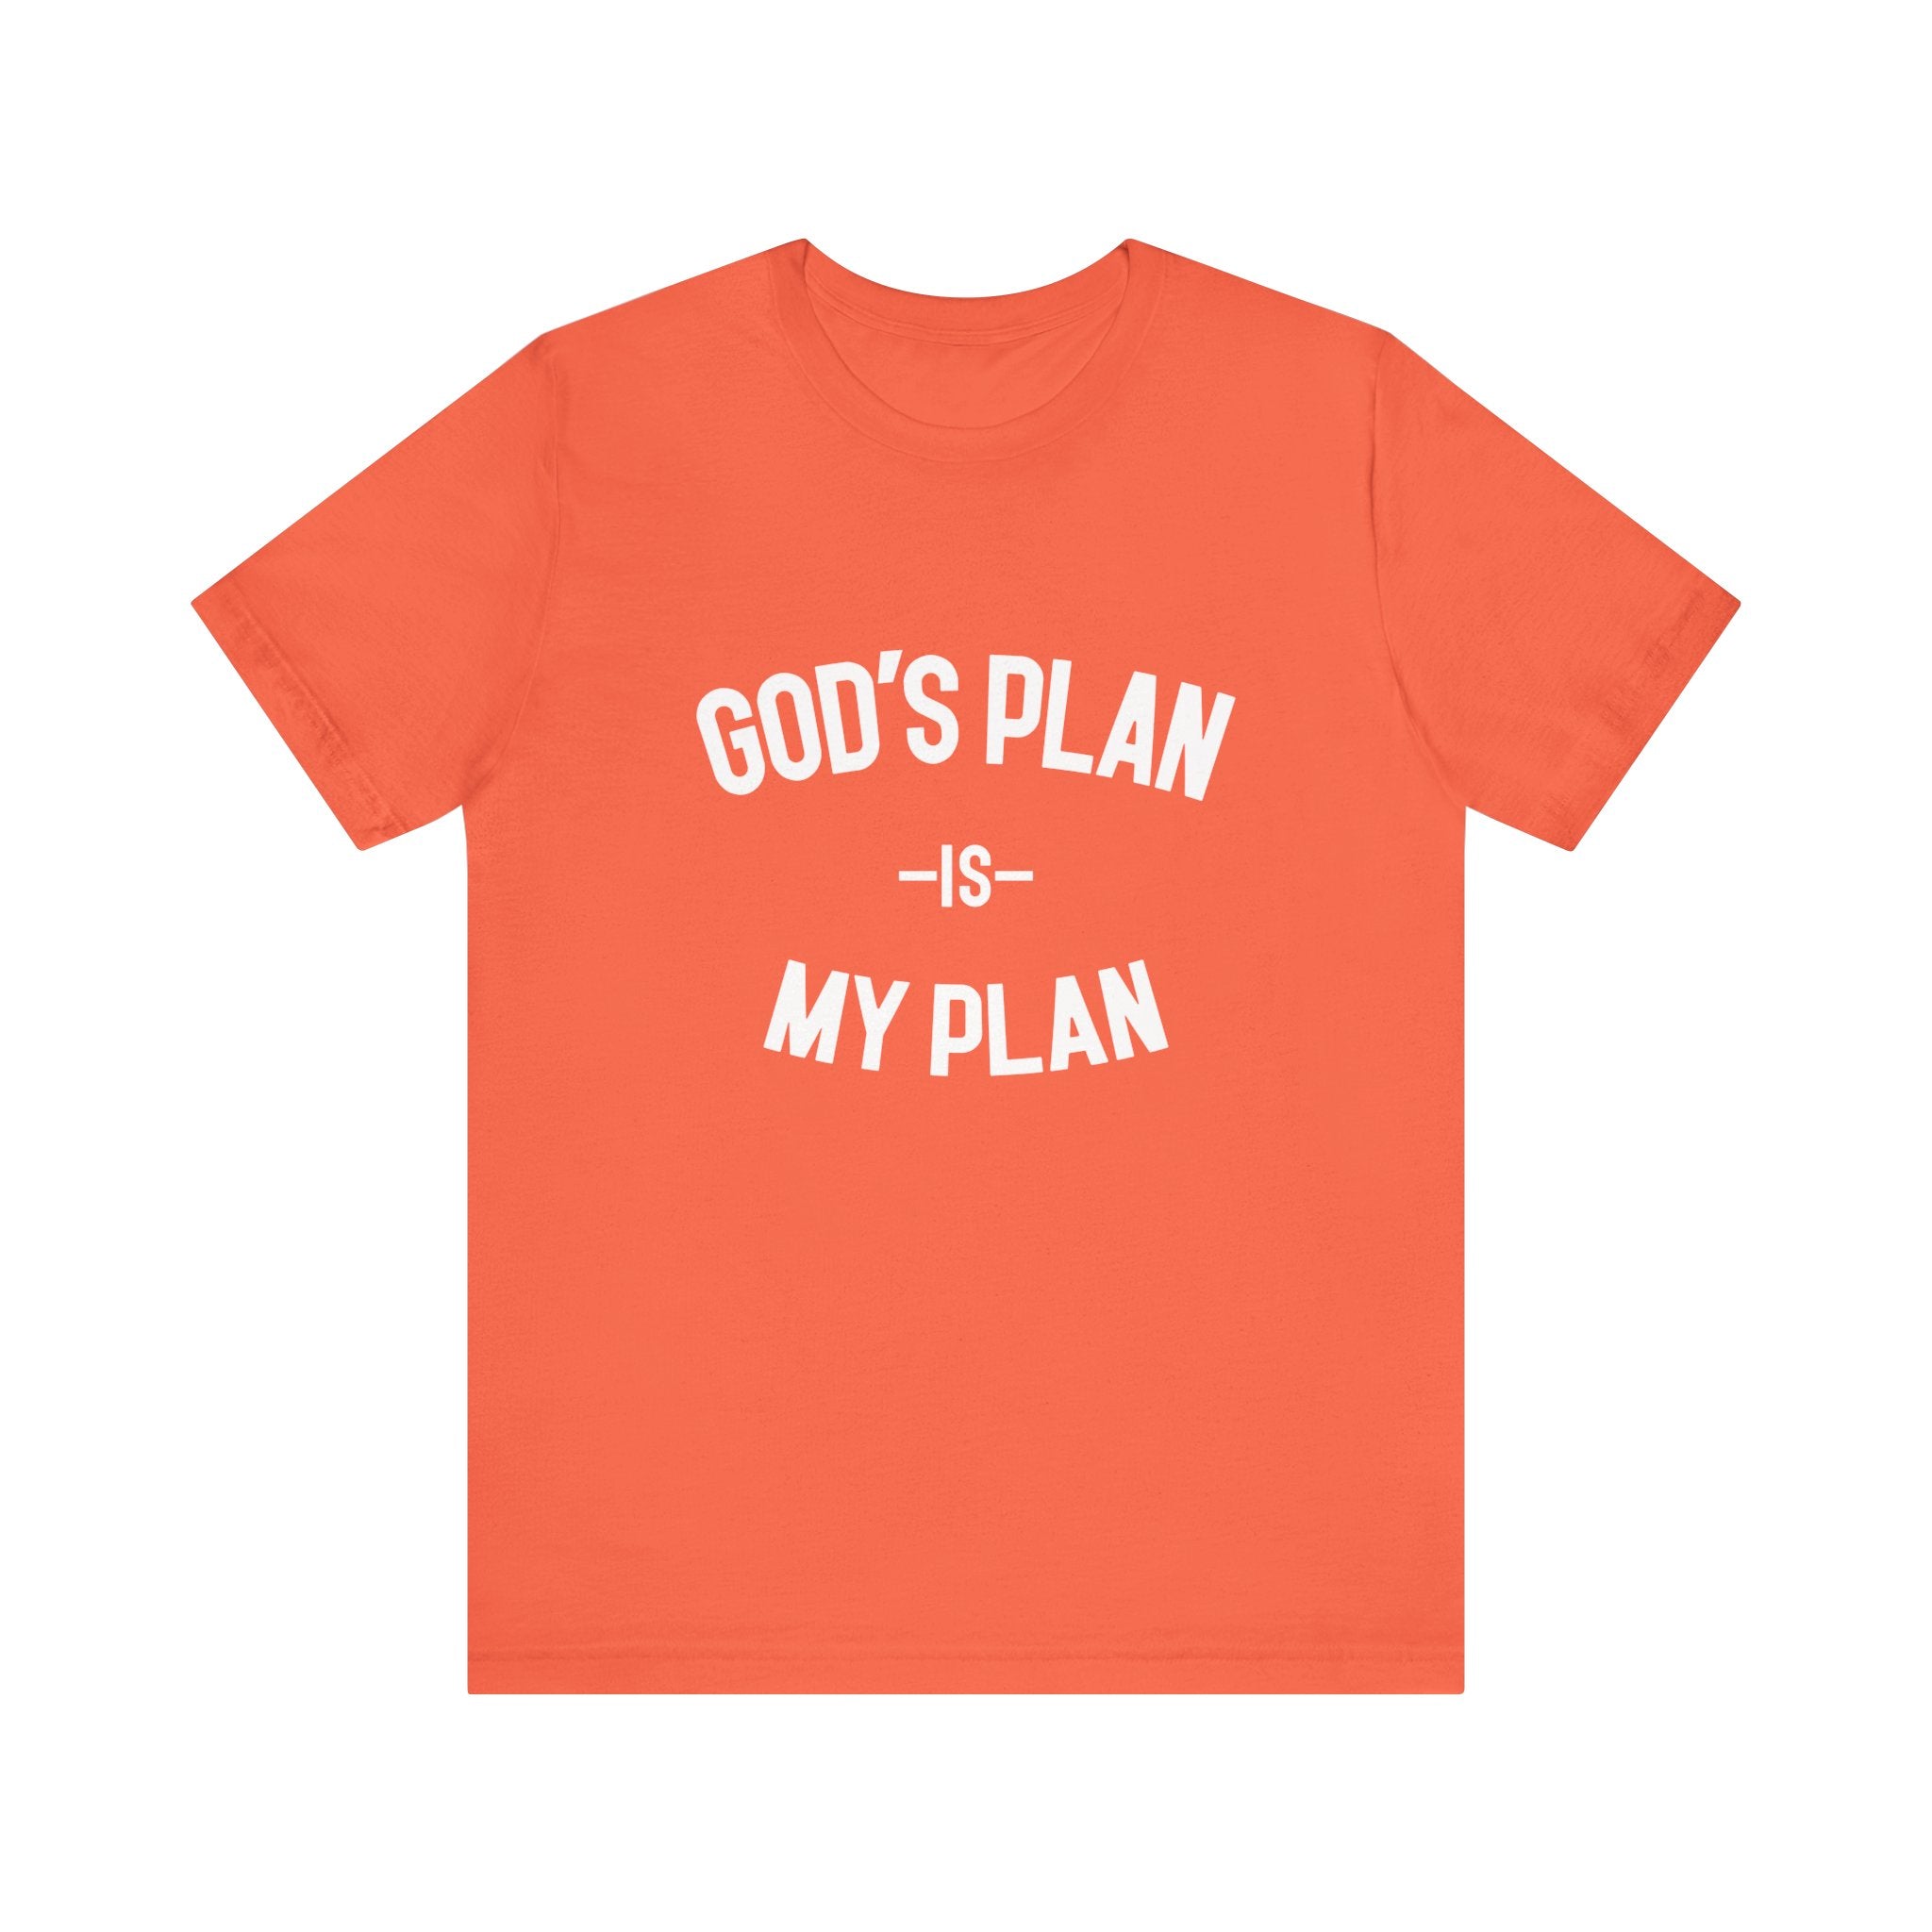 God's Plan My Plan (Sunset)